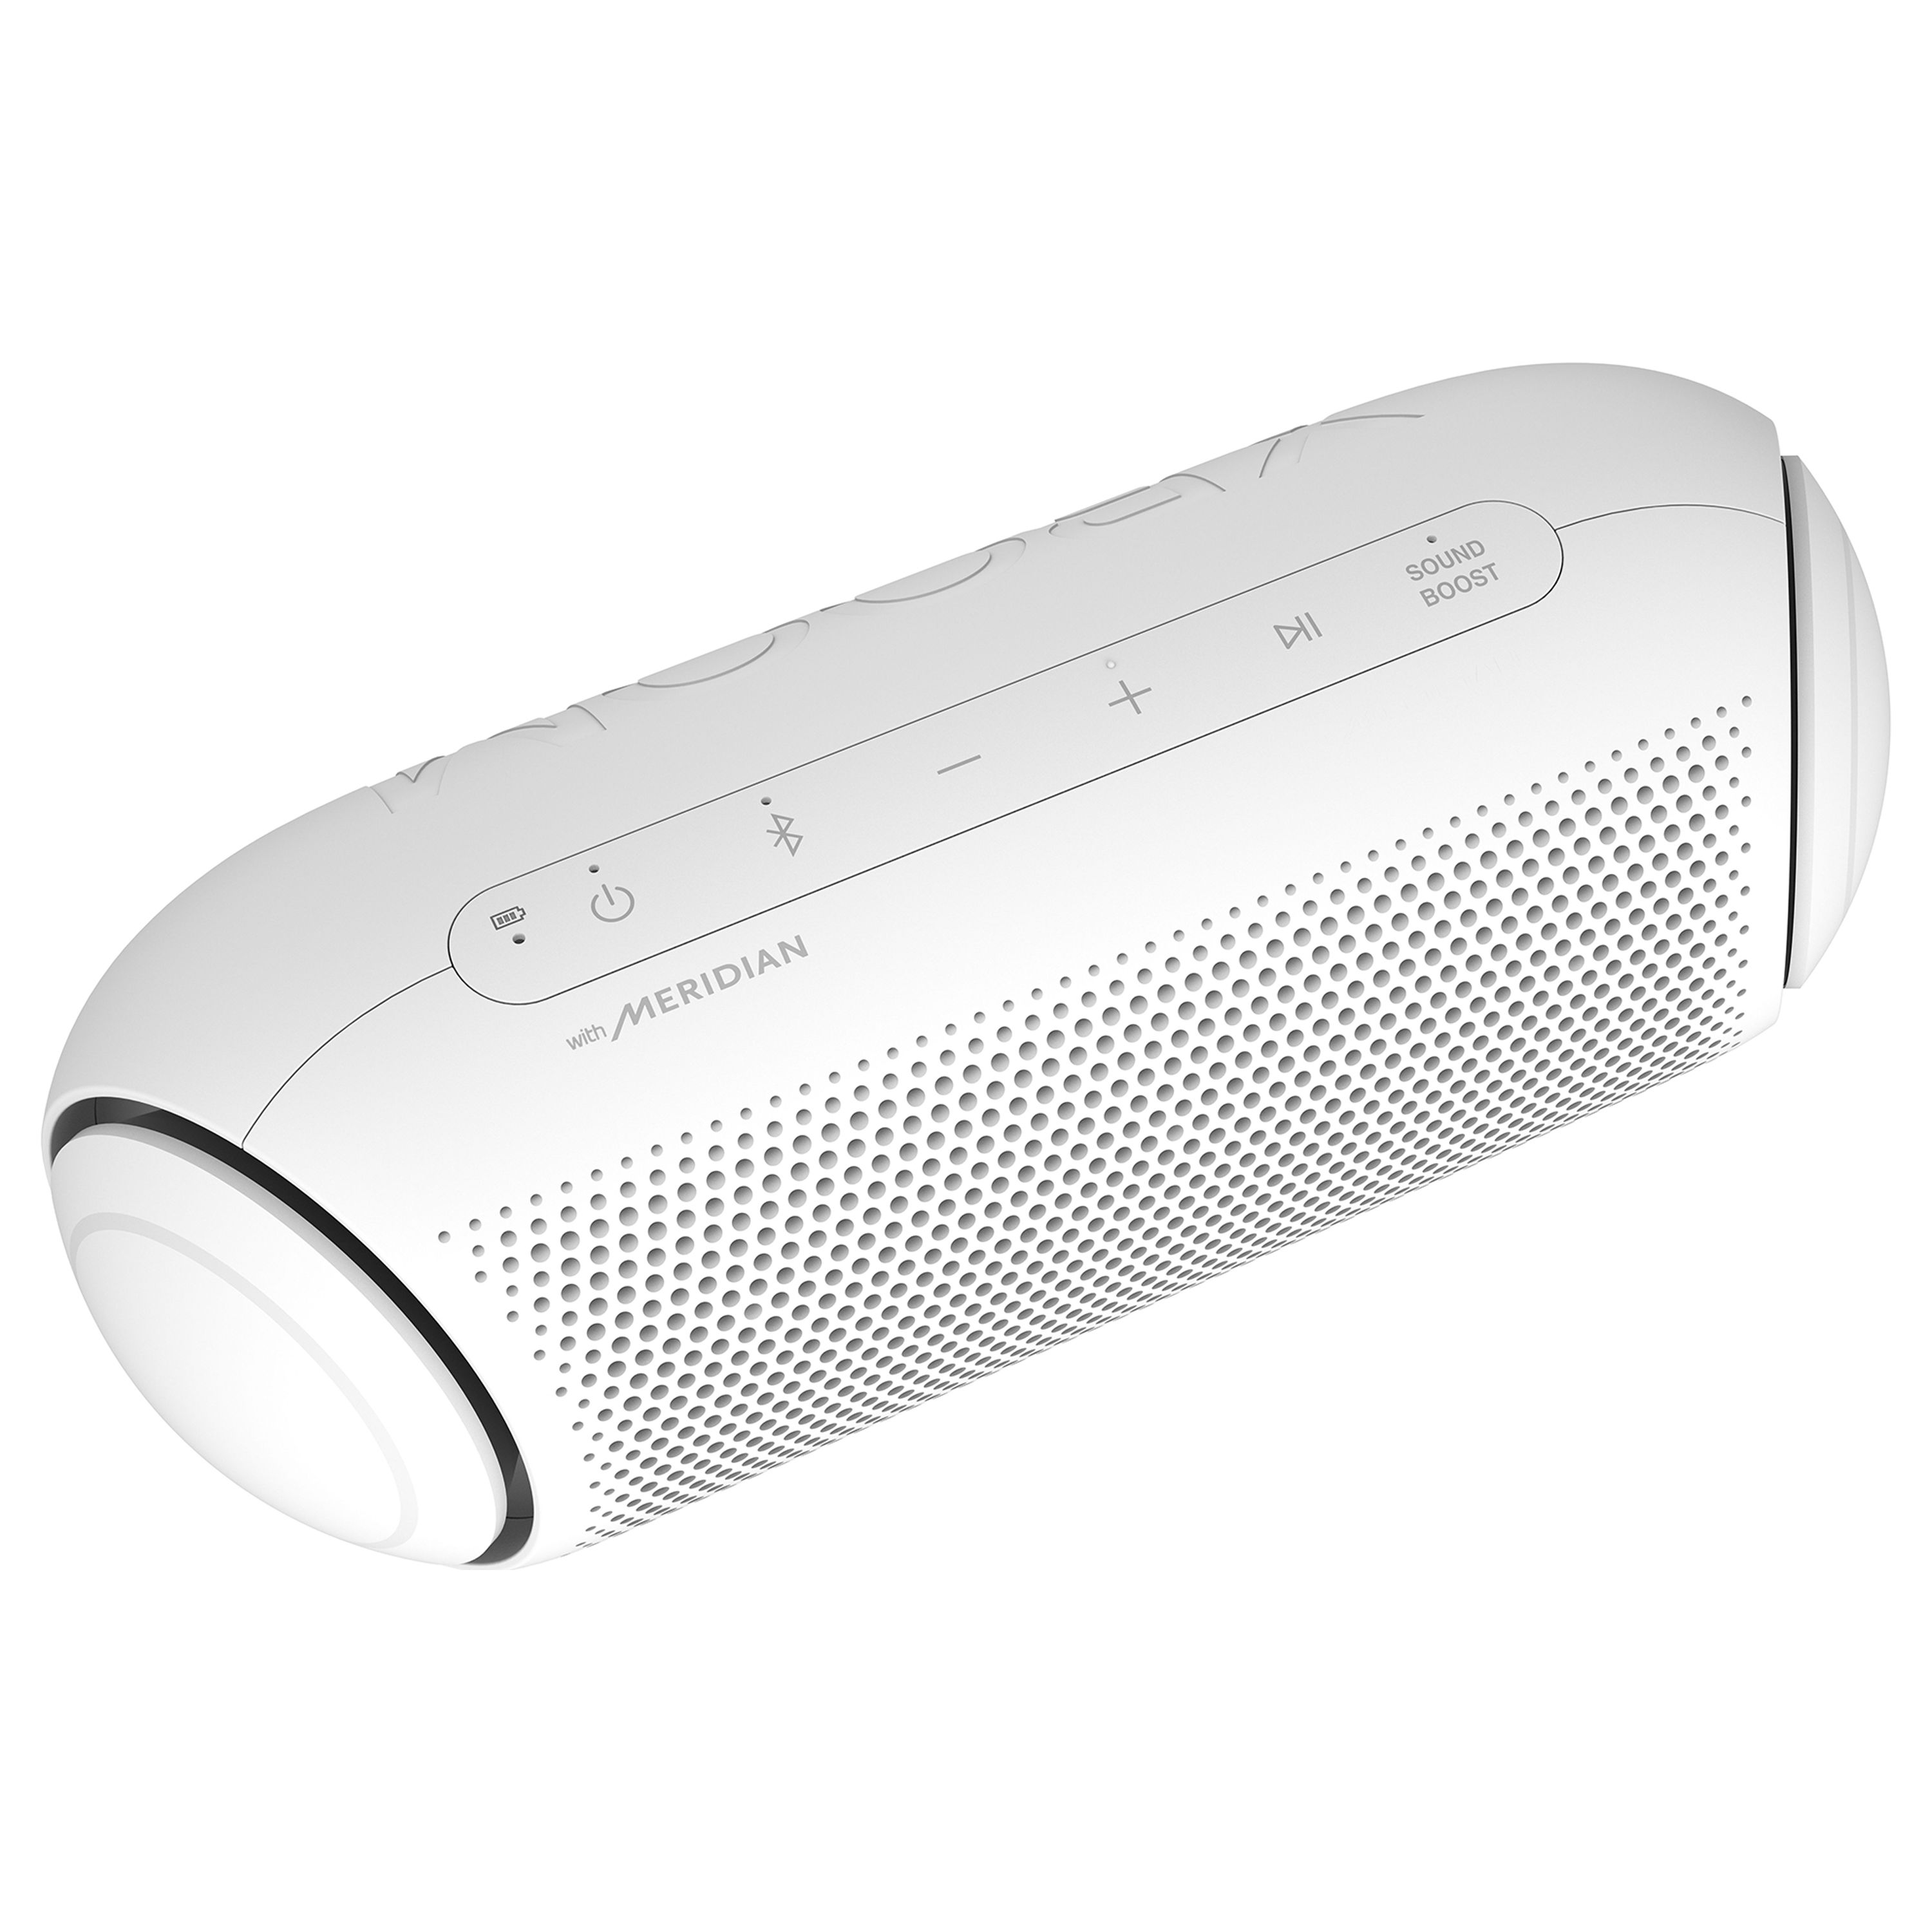 LG XBOOM Portable Bluetooth Speaker, White, PL5W - image 4 of 13